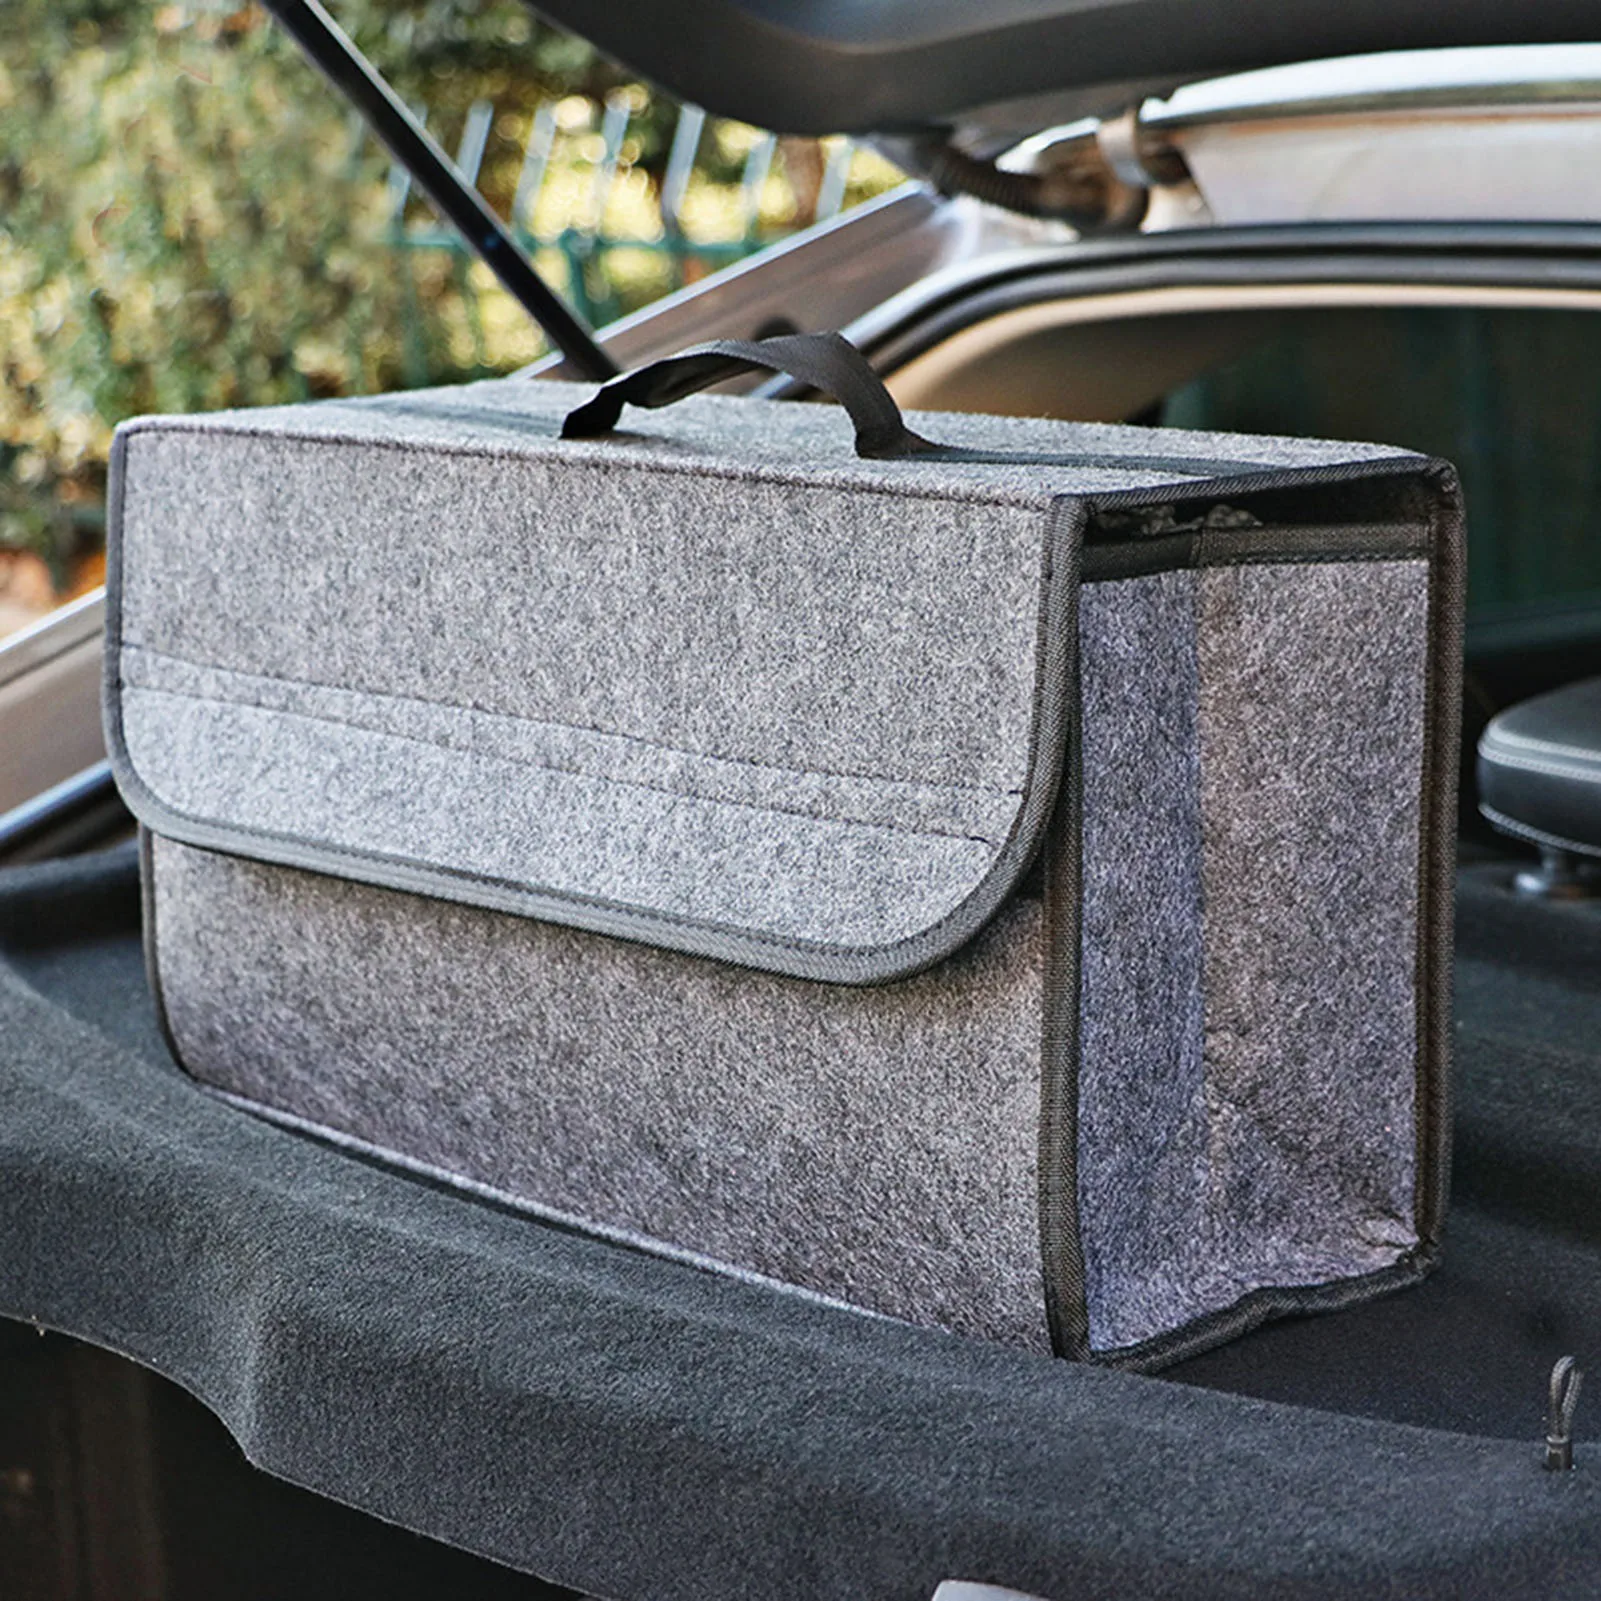 

Folding Large Non-slip Car Trunk Organizer Foldable Storage Box Case Felt Backseat Storage Bag Auto Stowing Tidying Container